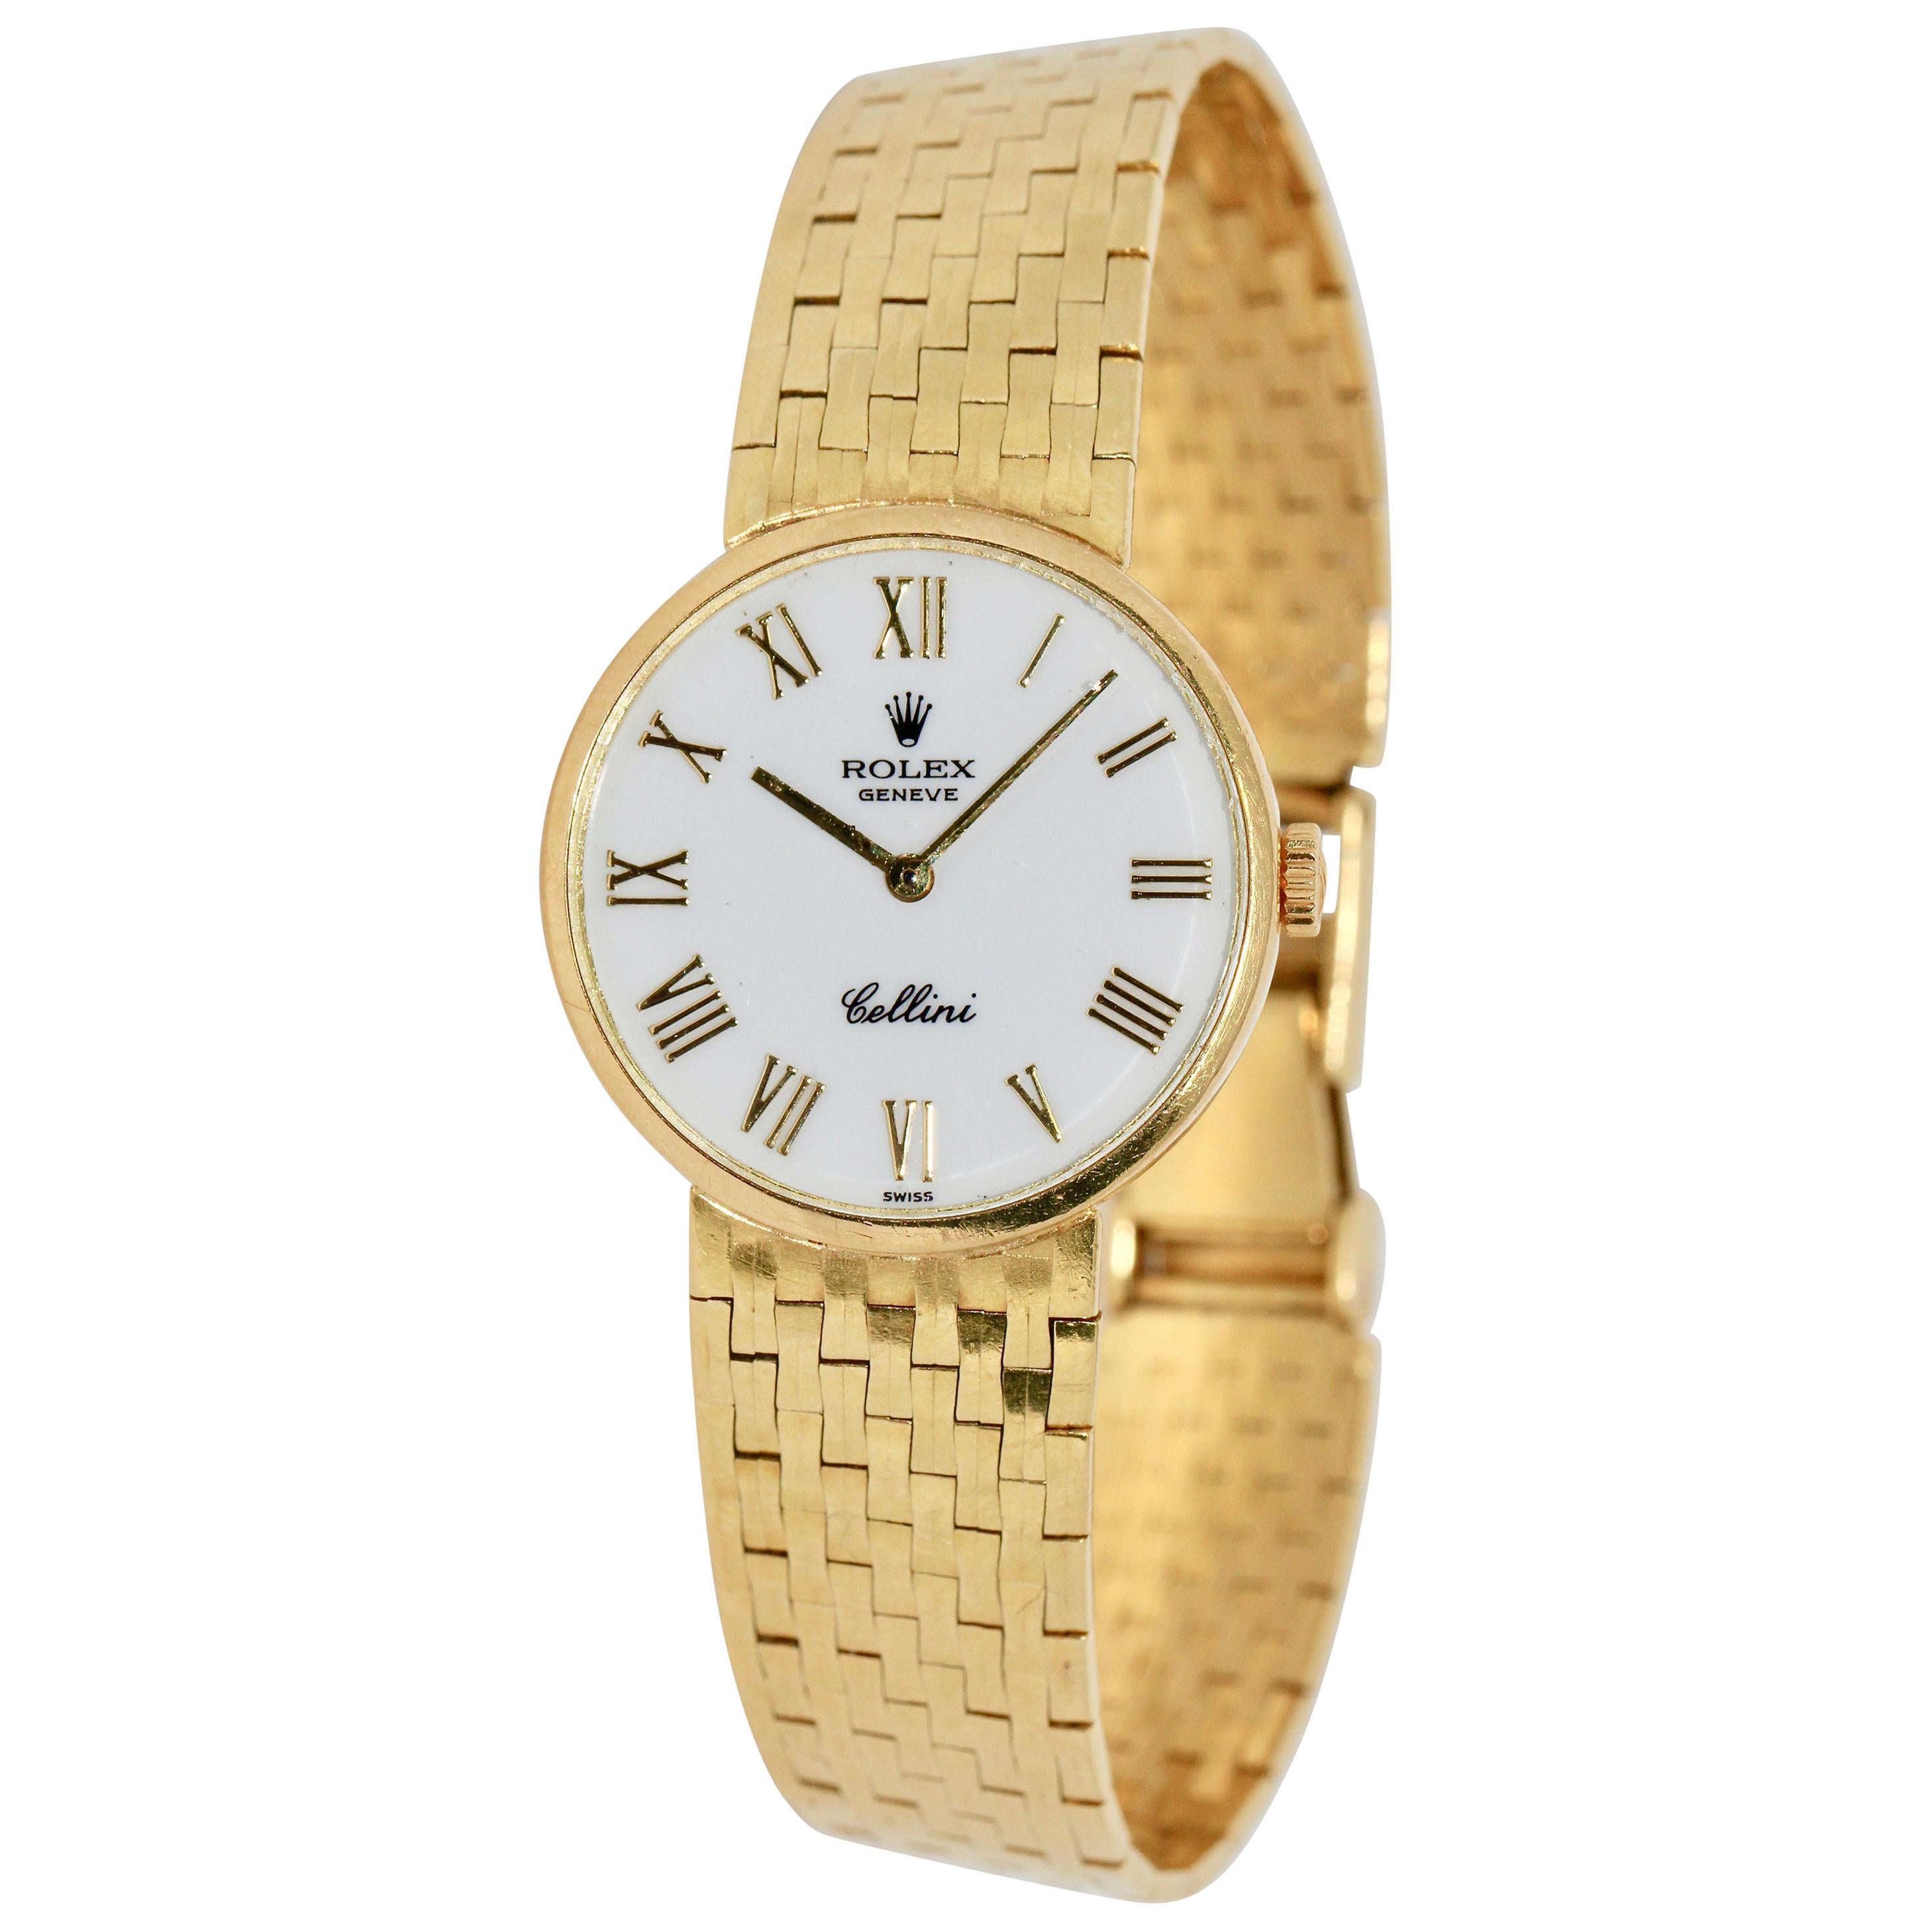 Rolex Cellini Ladies Wrist Watch, 18 Karat Gold, Manual Winding